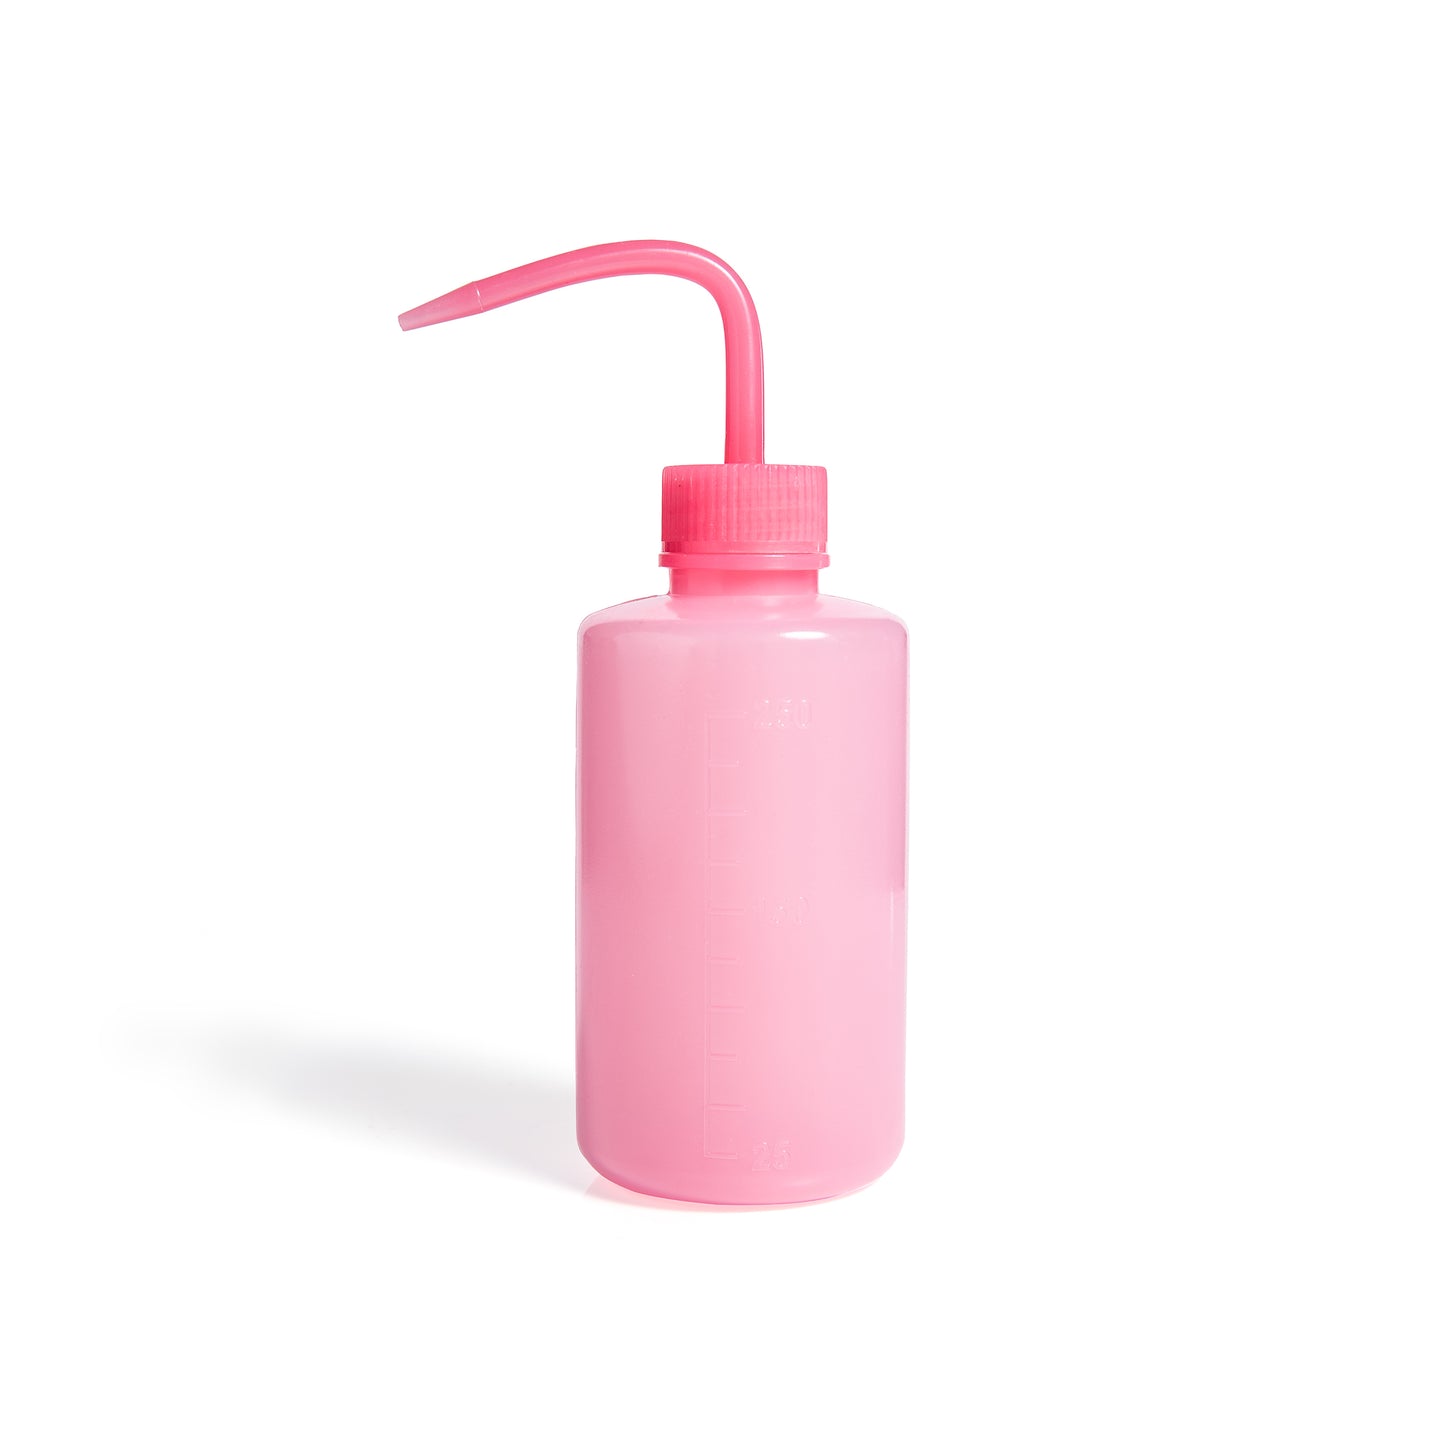 END OF YEAR SALE - 5$ Pink Lash Bath Bottle